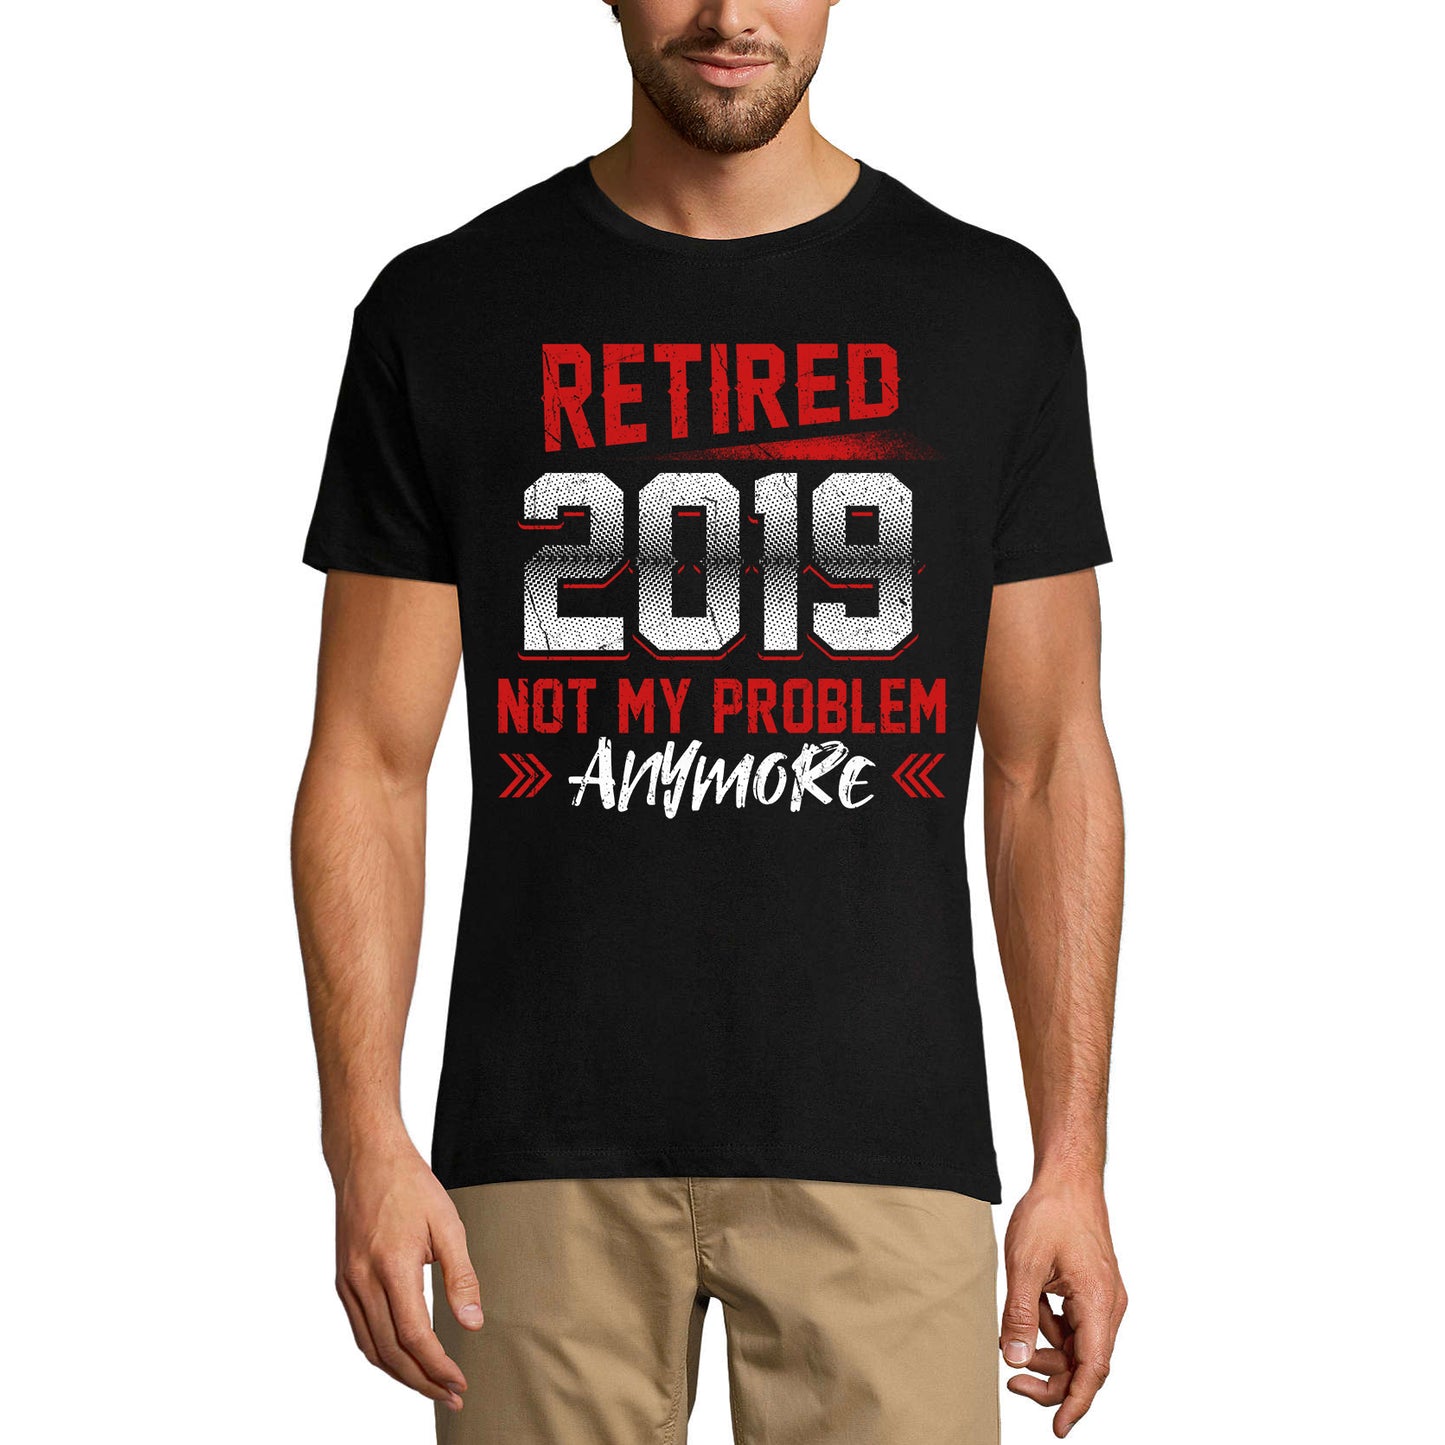 ULTRABASIC Men's T-Shirt Retired 2019 - Not My Problem Anymore - Funny Tee Shirt